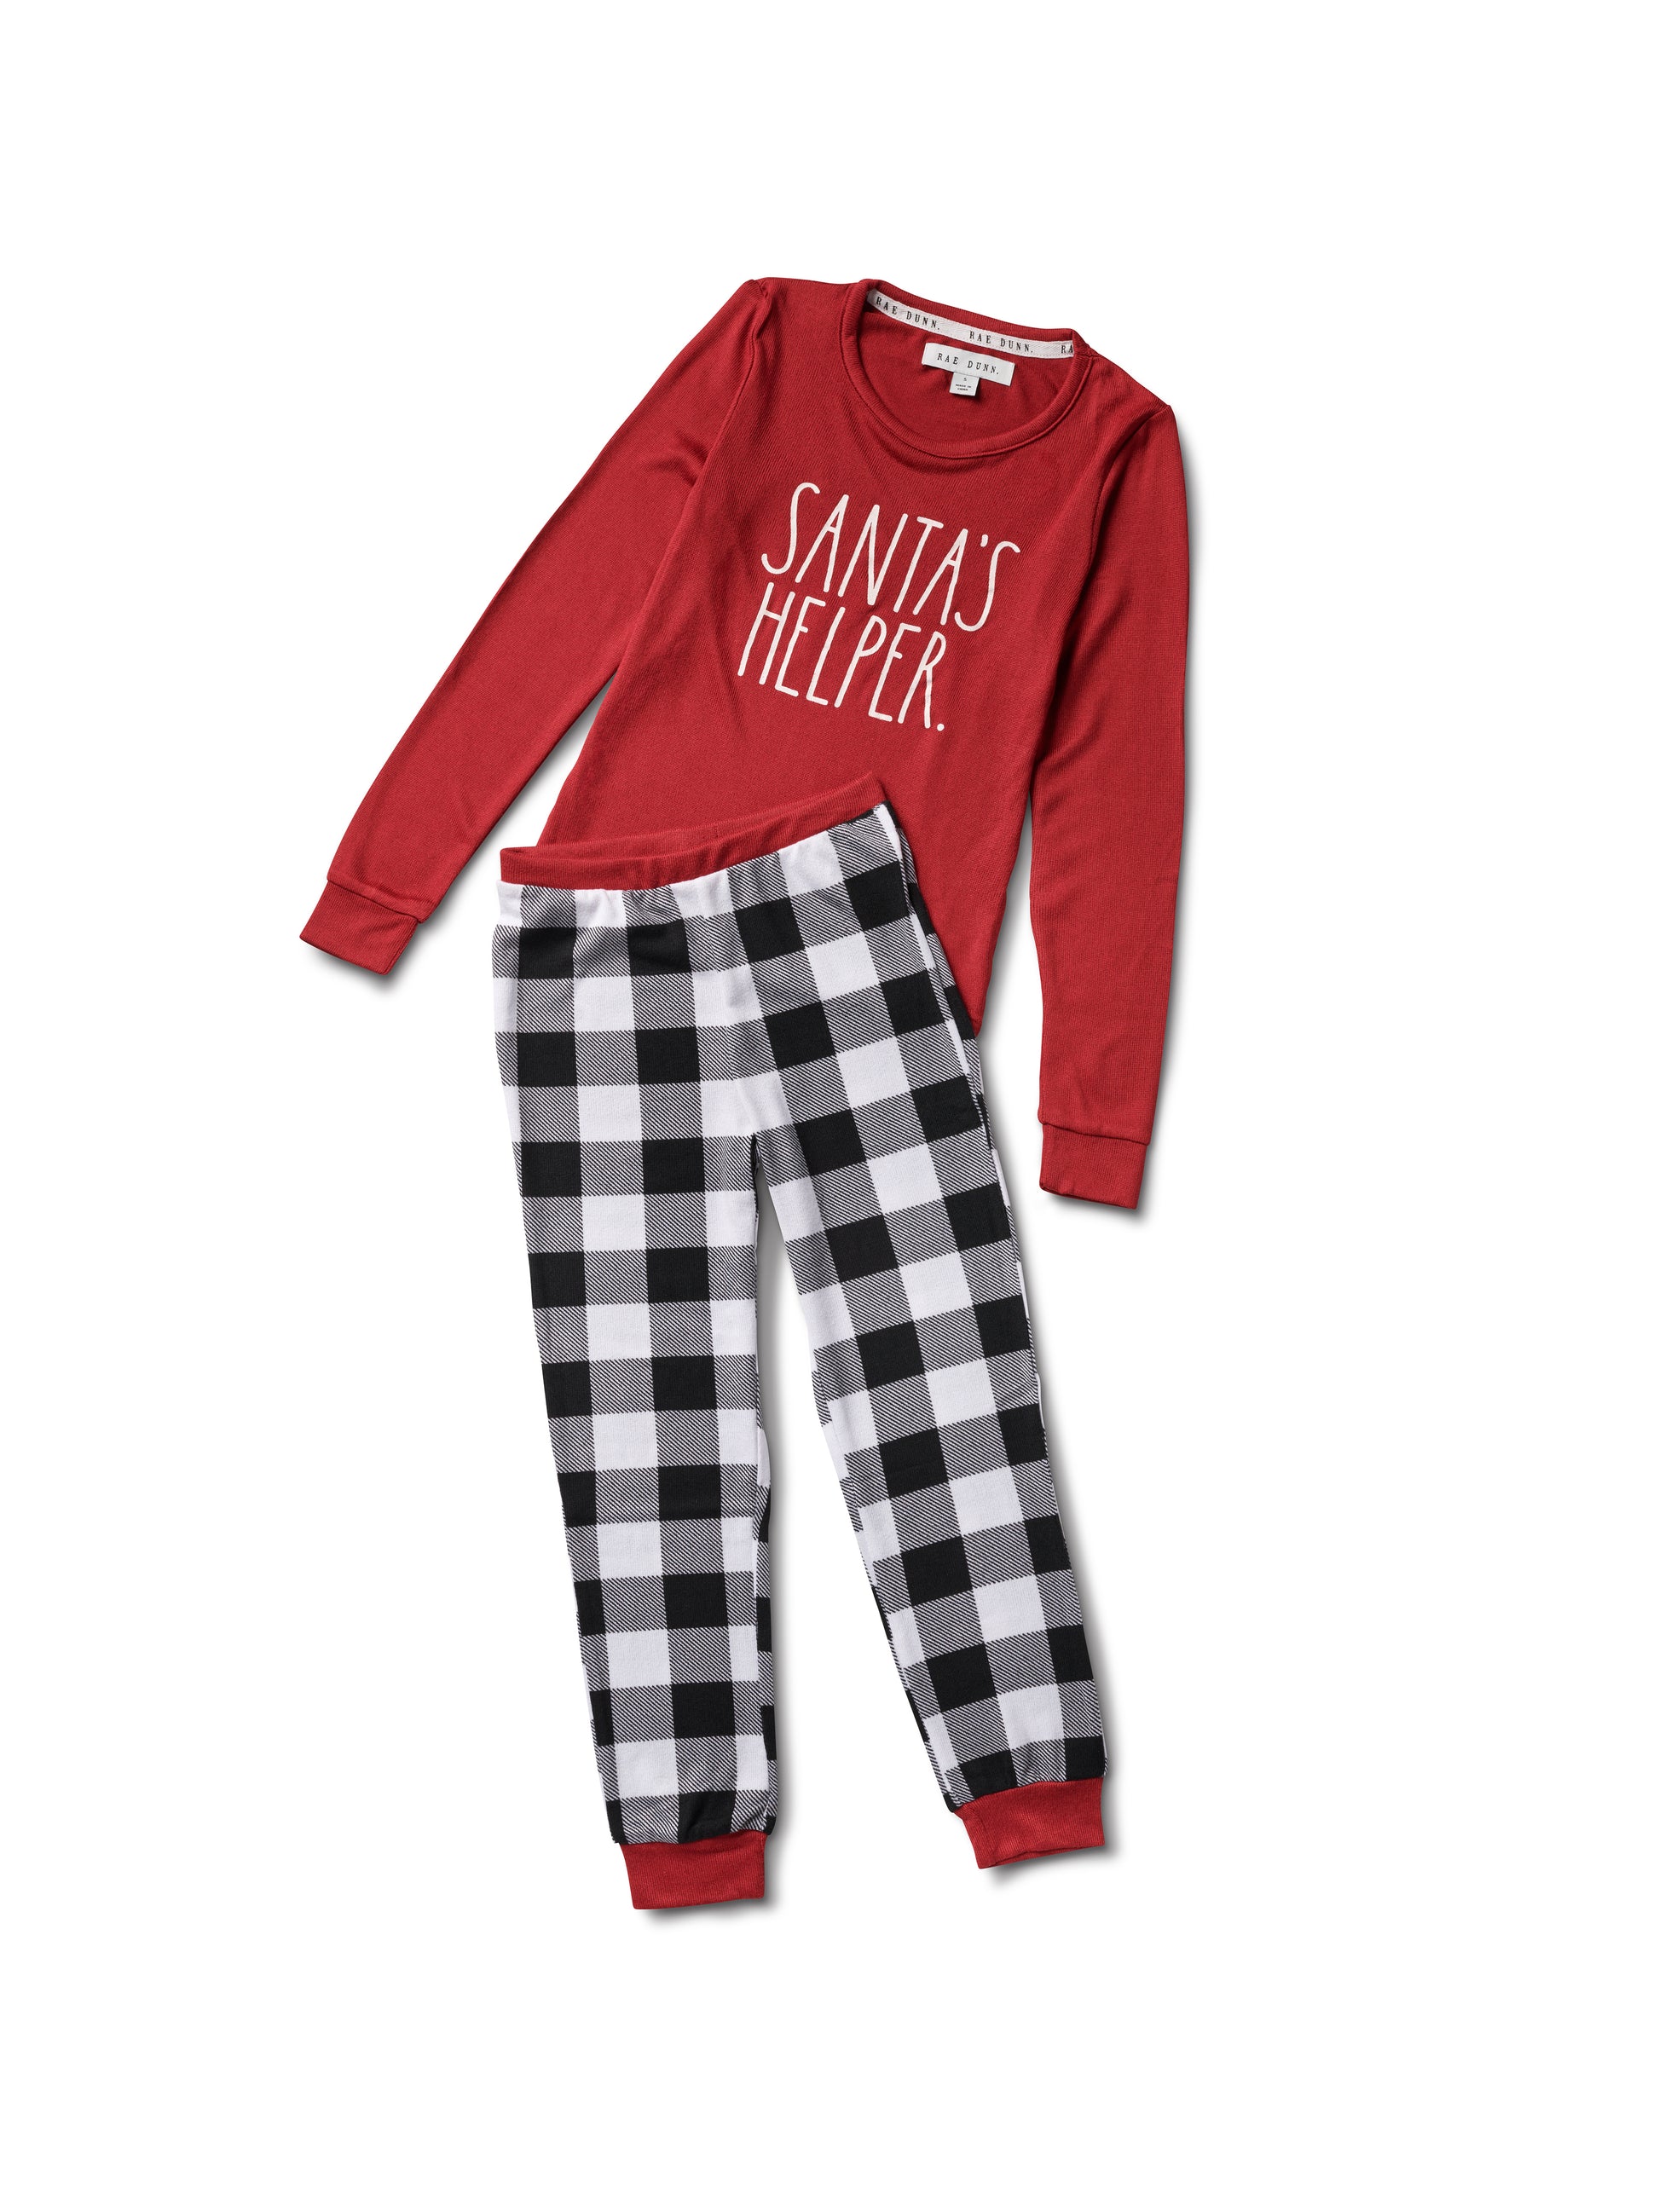 Kids "SANTA'S HELPER" Long Sleeve Top and Jogger Pajama Set - Rae Dunn Wear - G Pant Set